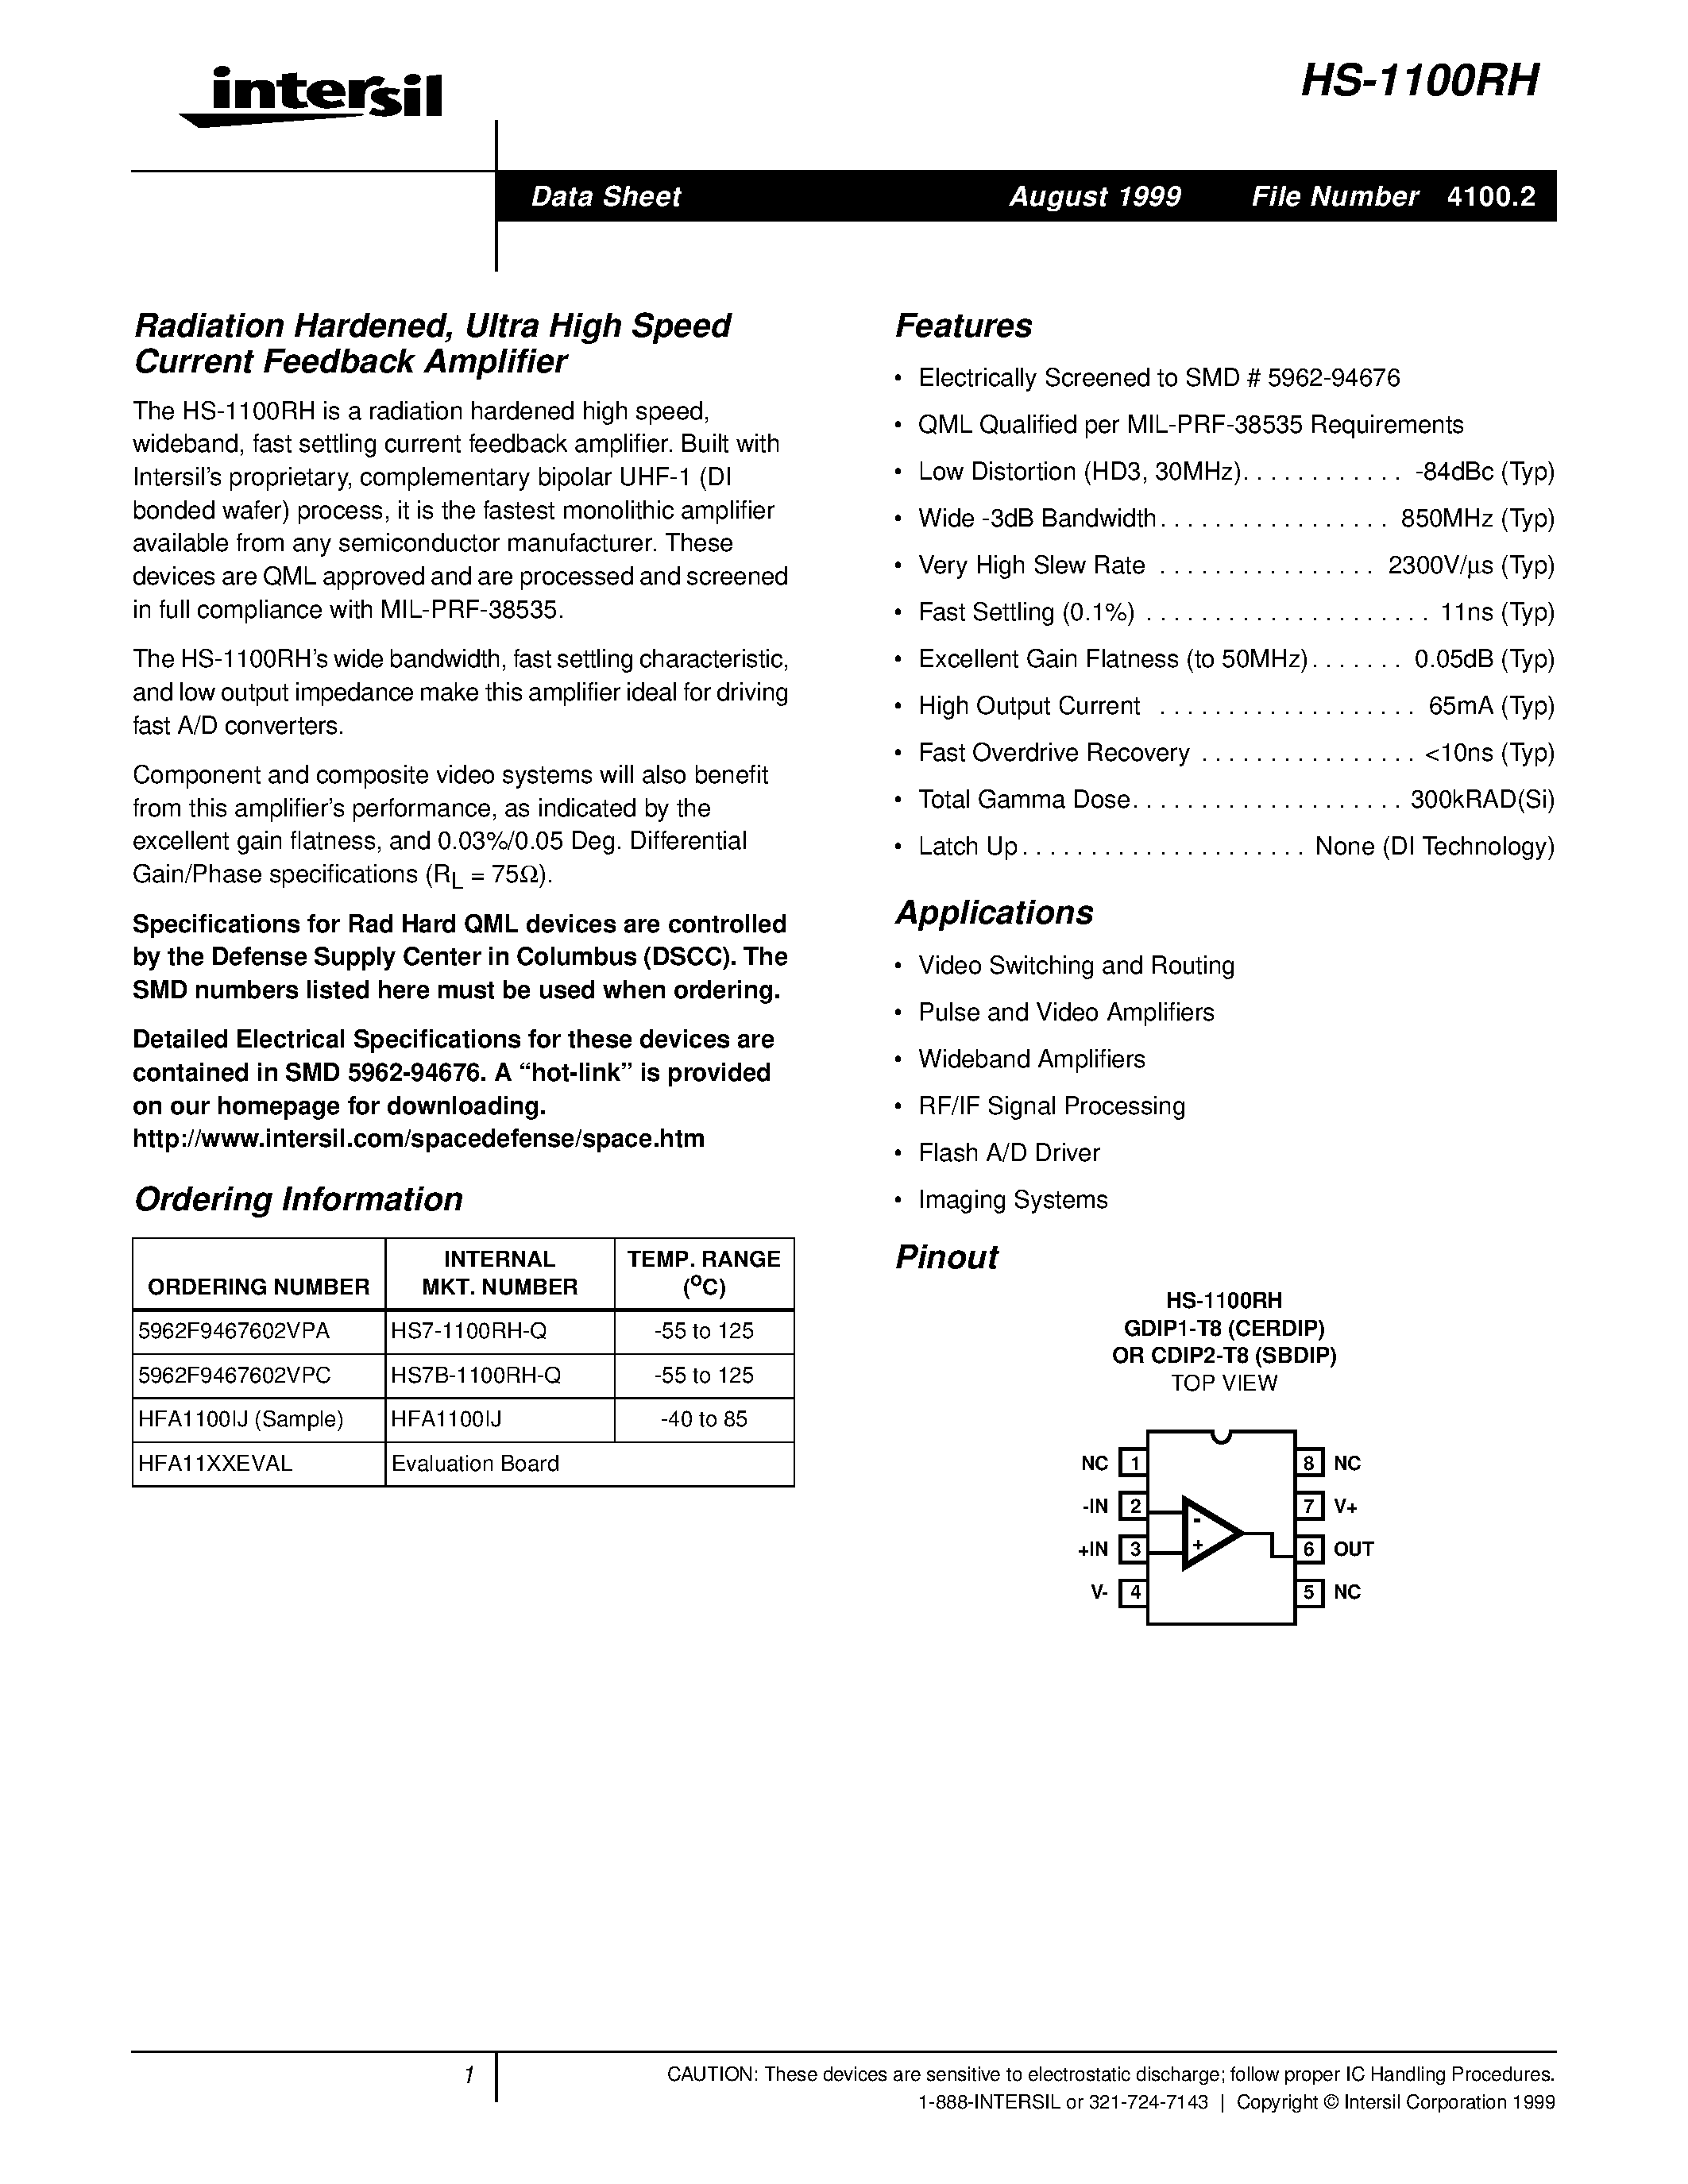 Даташит HS7B-1100RH-Q - Radiation Hardened/ Ultra High Speed Current Feedback Amplifier страница 1